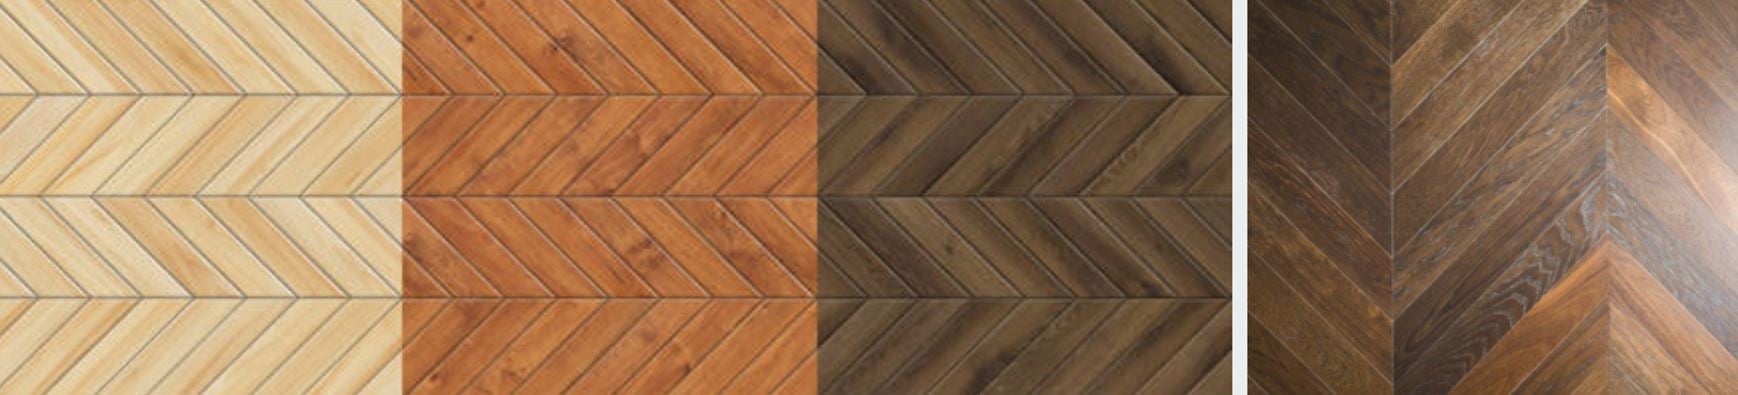 hallharthomes-chevron-patterned-flooring